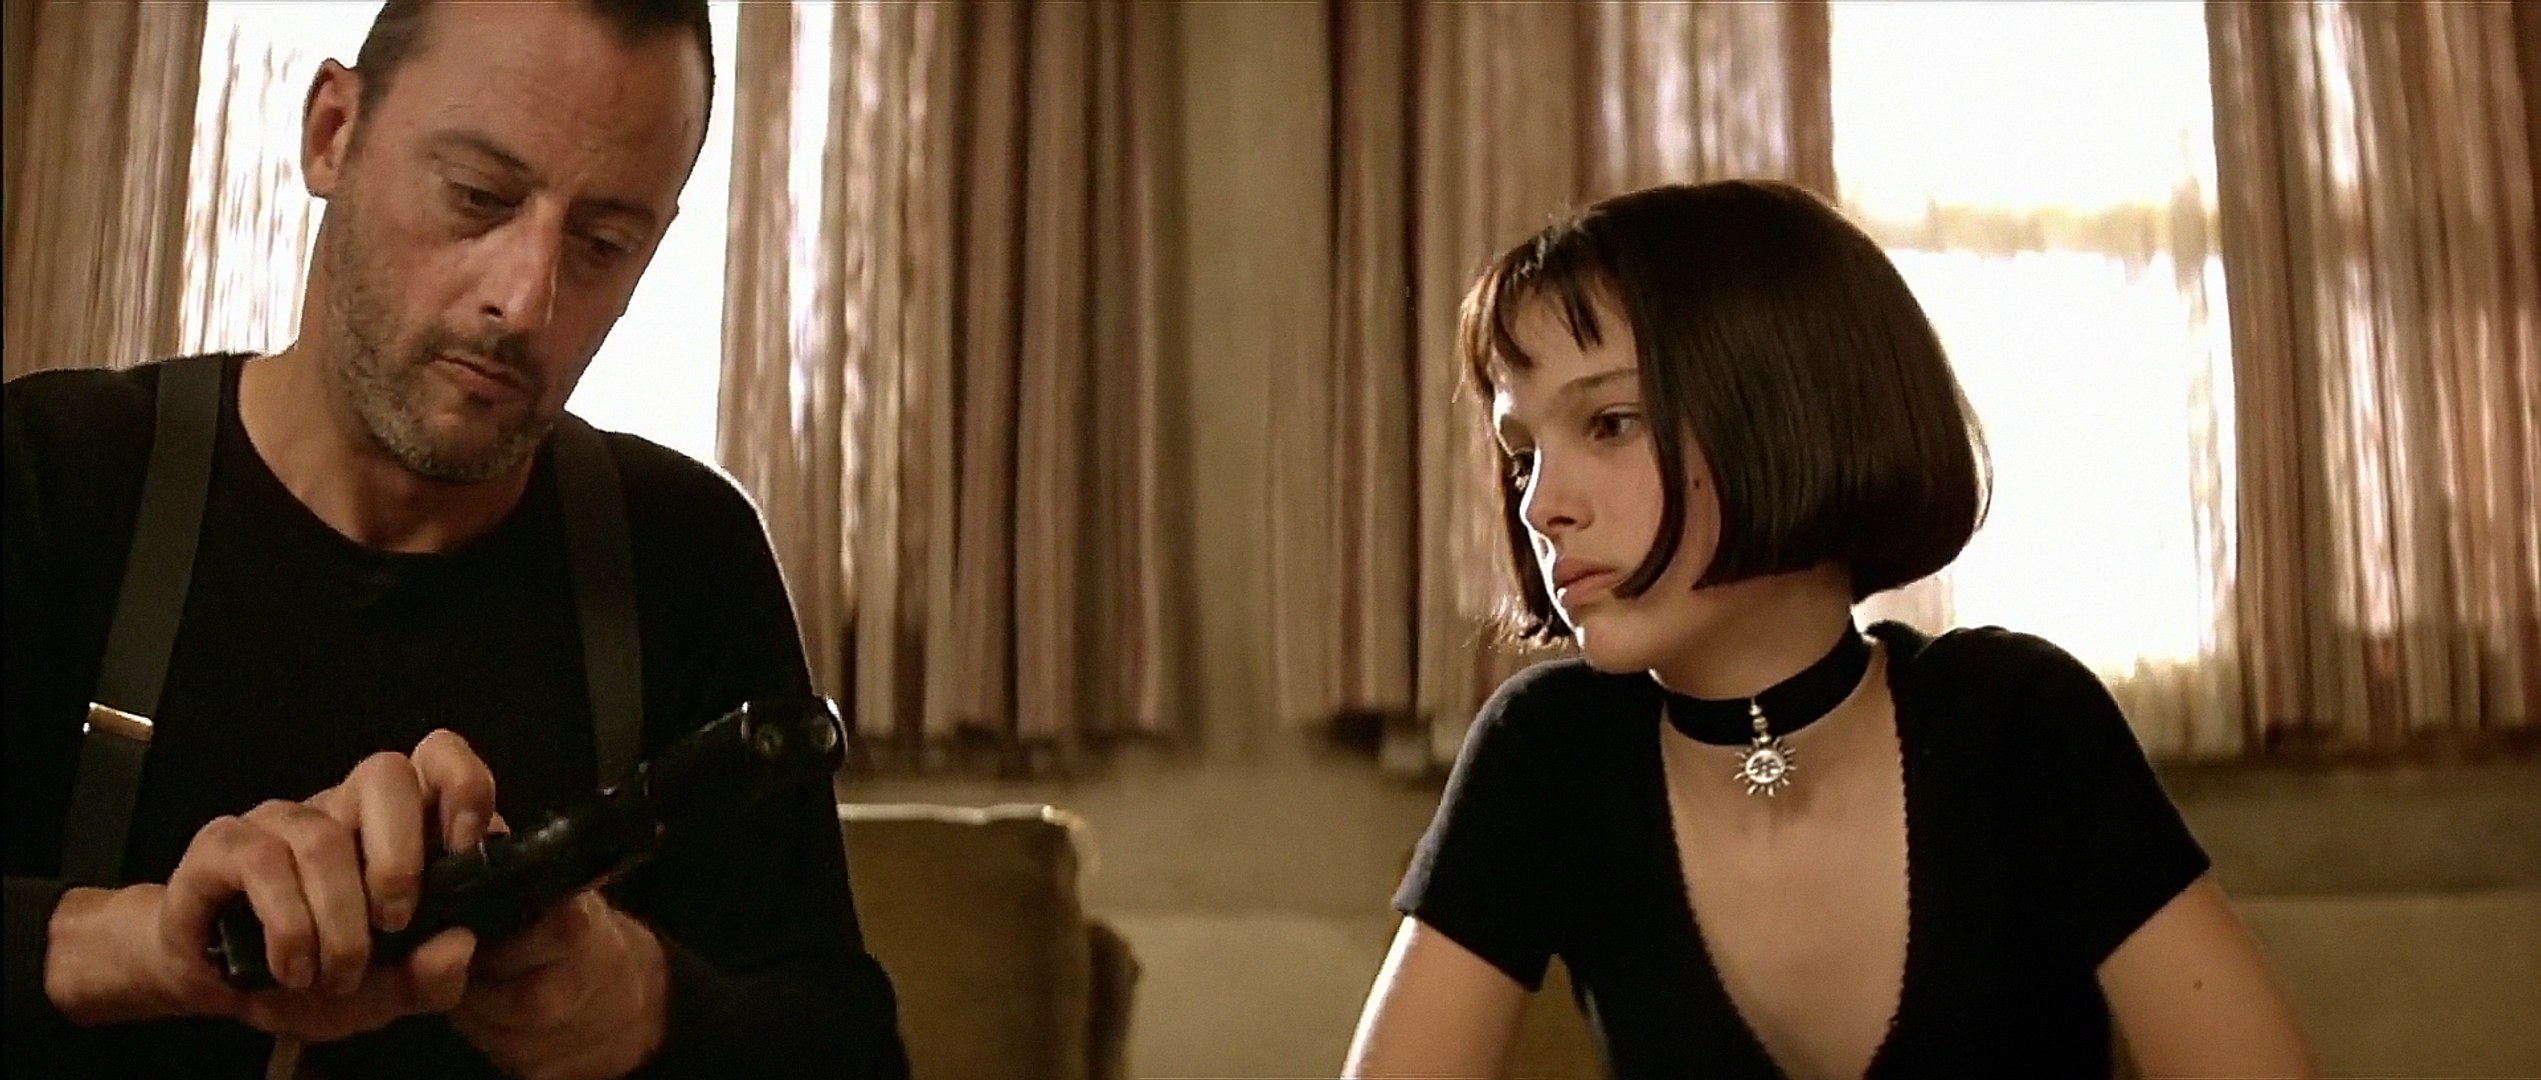 Leon The Professional Movie - Jean Reno, Natalie Portman - video ...